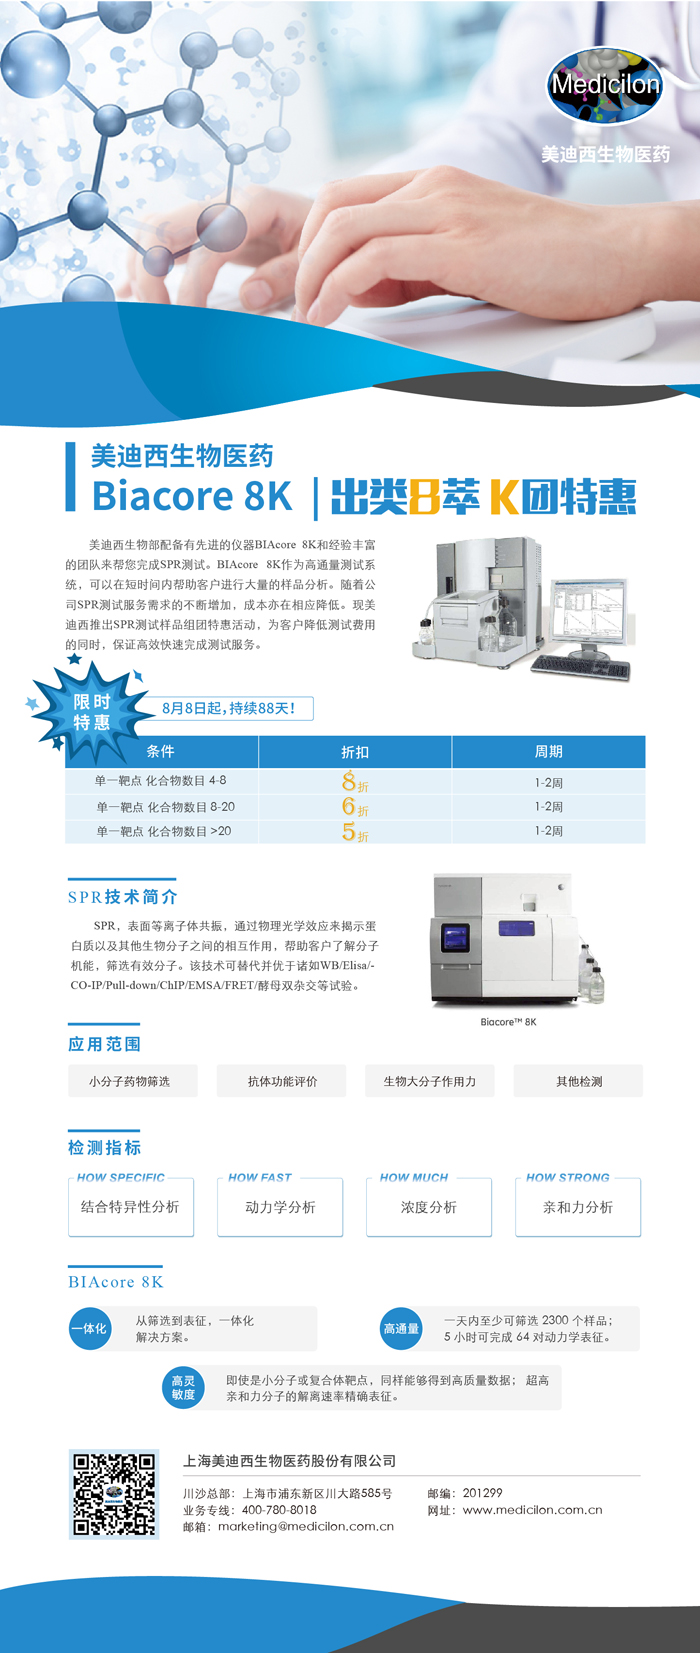 Biacore 8K,出类8萃 K团特惠